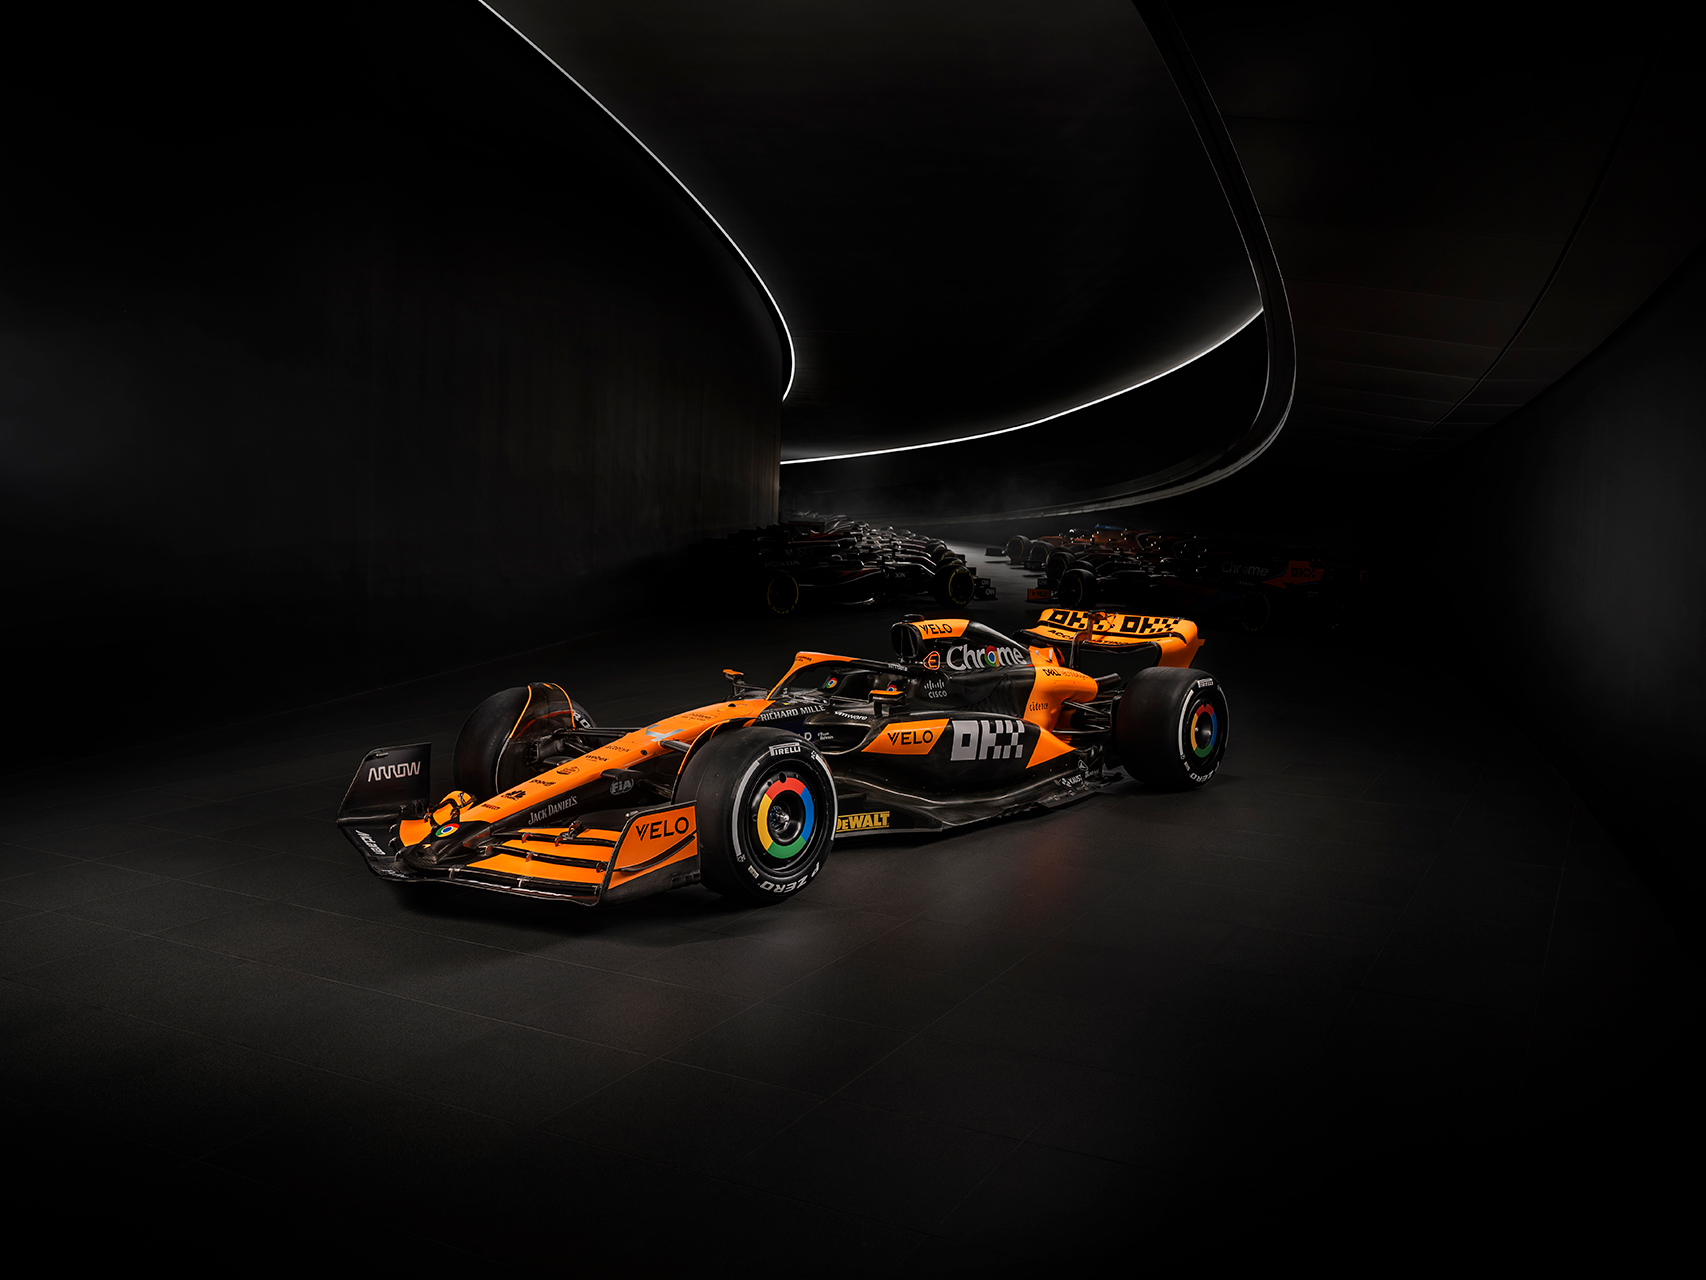 Picture of the McLaren F1 car